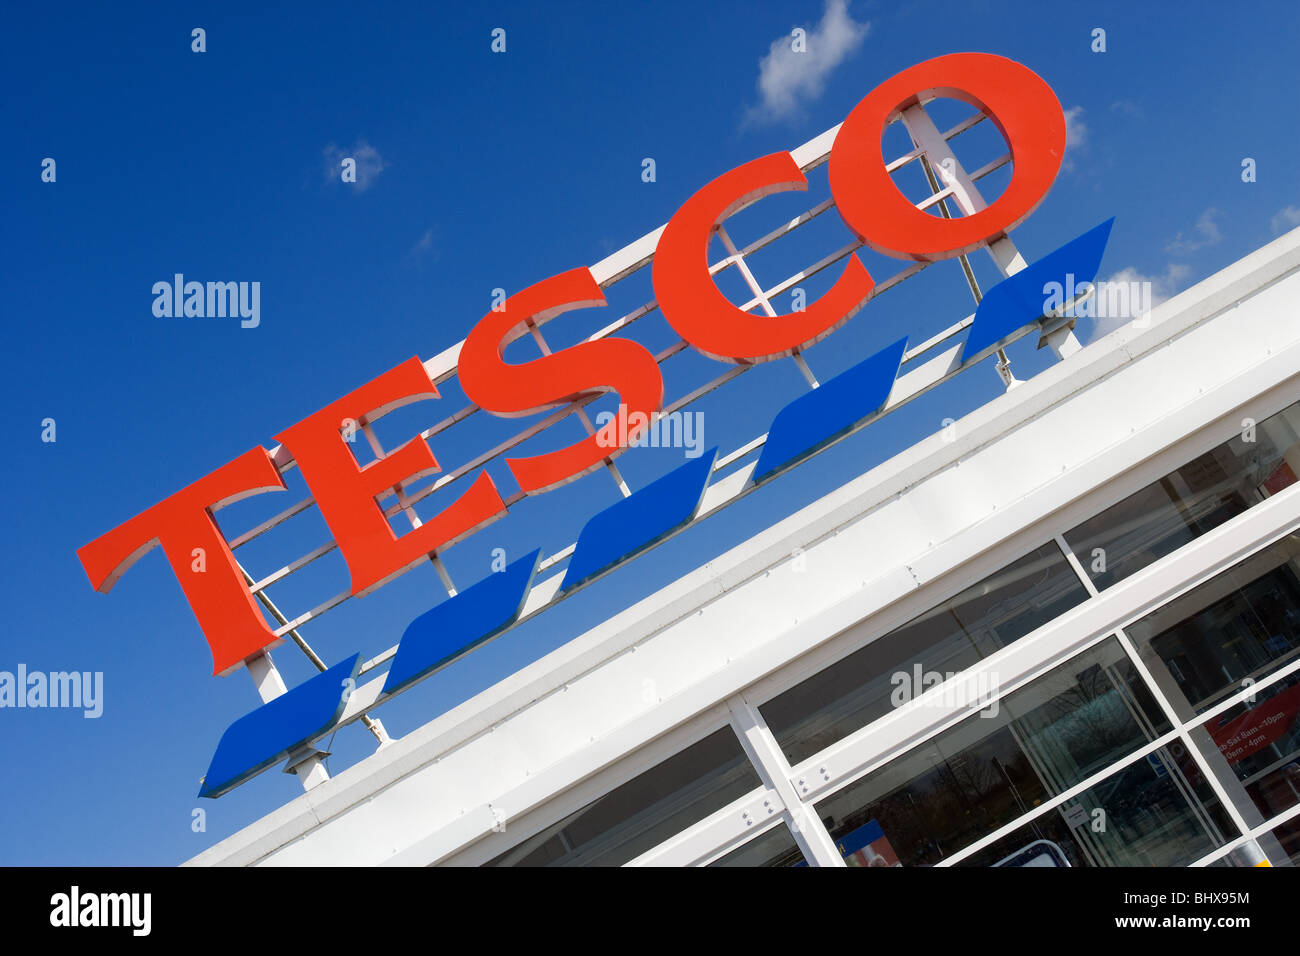 Tesco Supermarket Store Sign Against A Deep Blue Sky Stock Photo